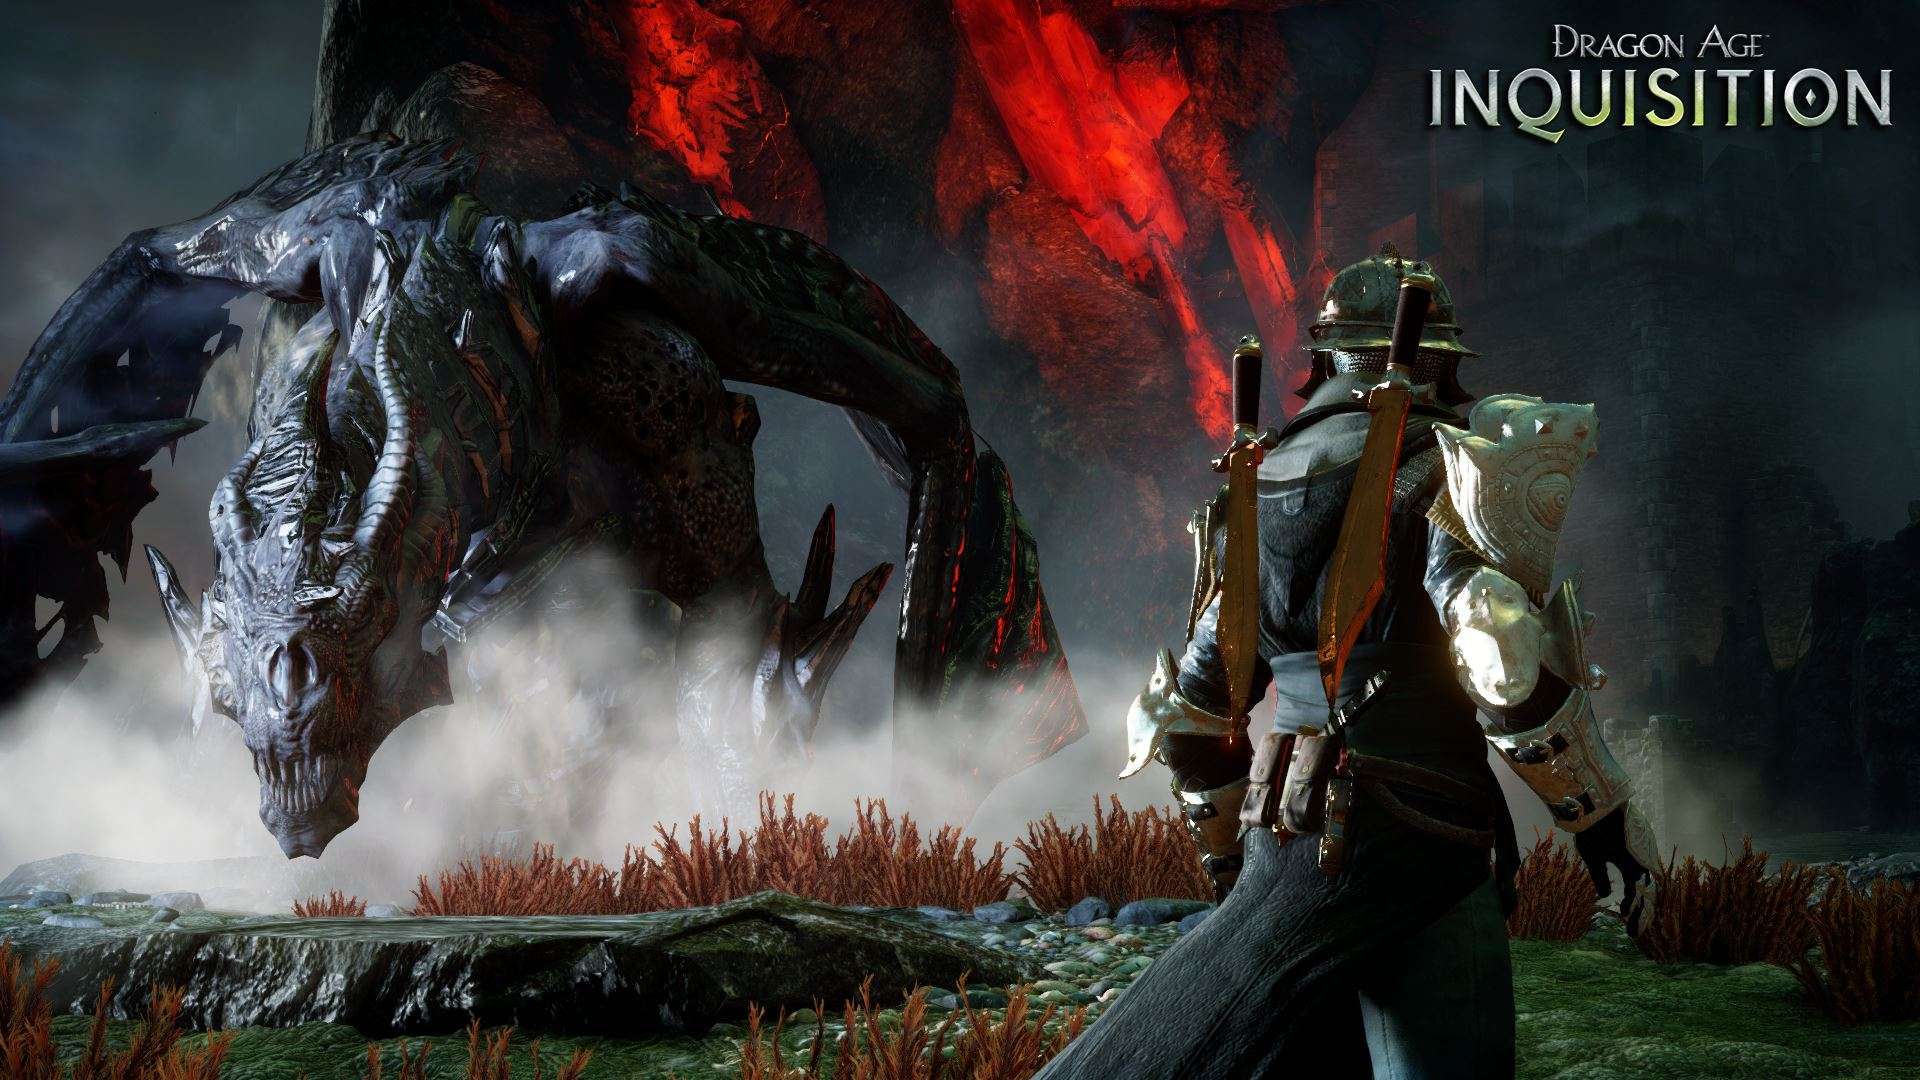 Wallpaper Dragon Age Inquisition HD 1080p Upload At June